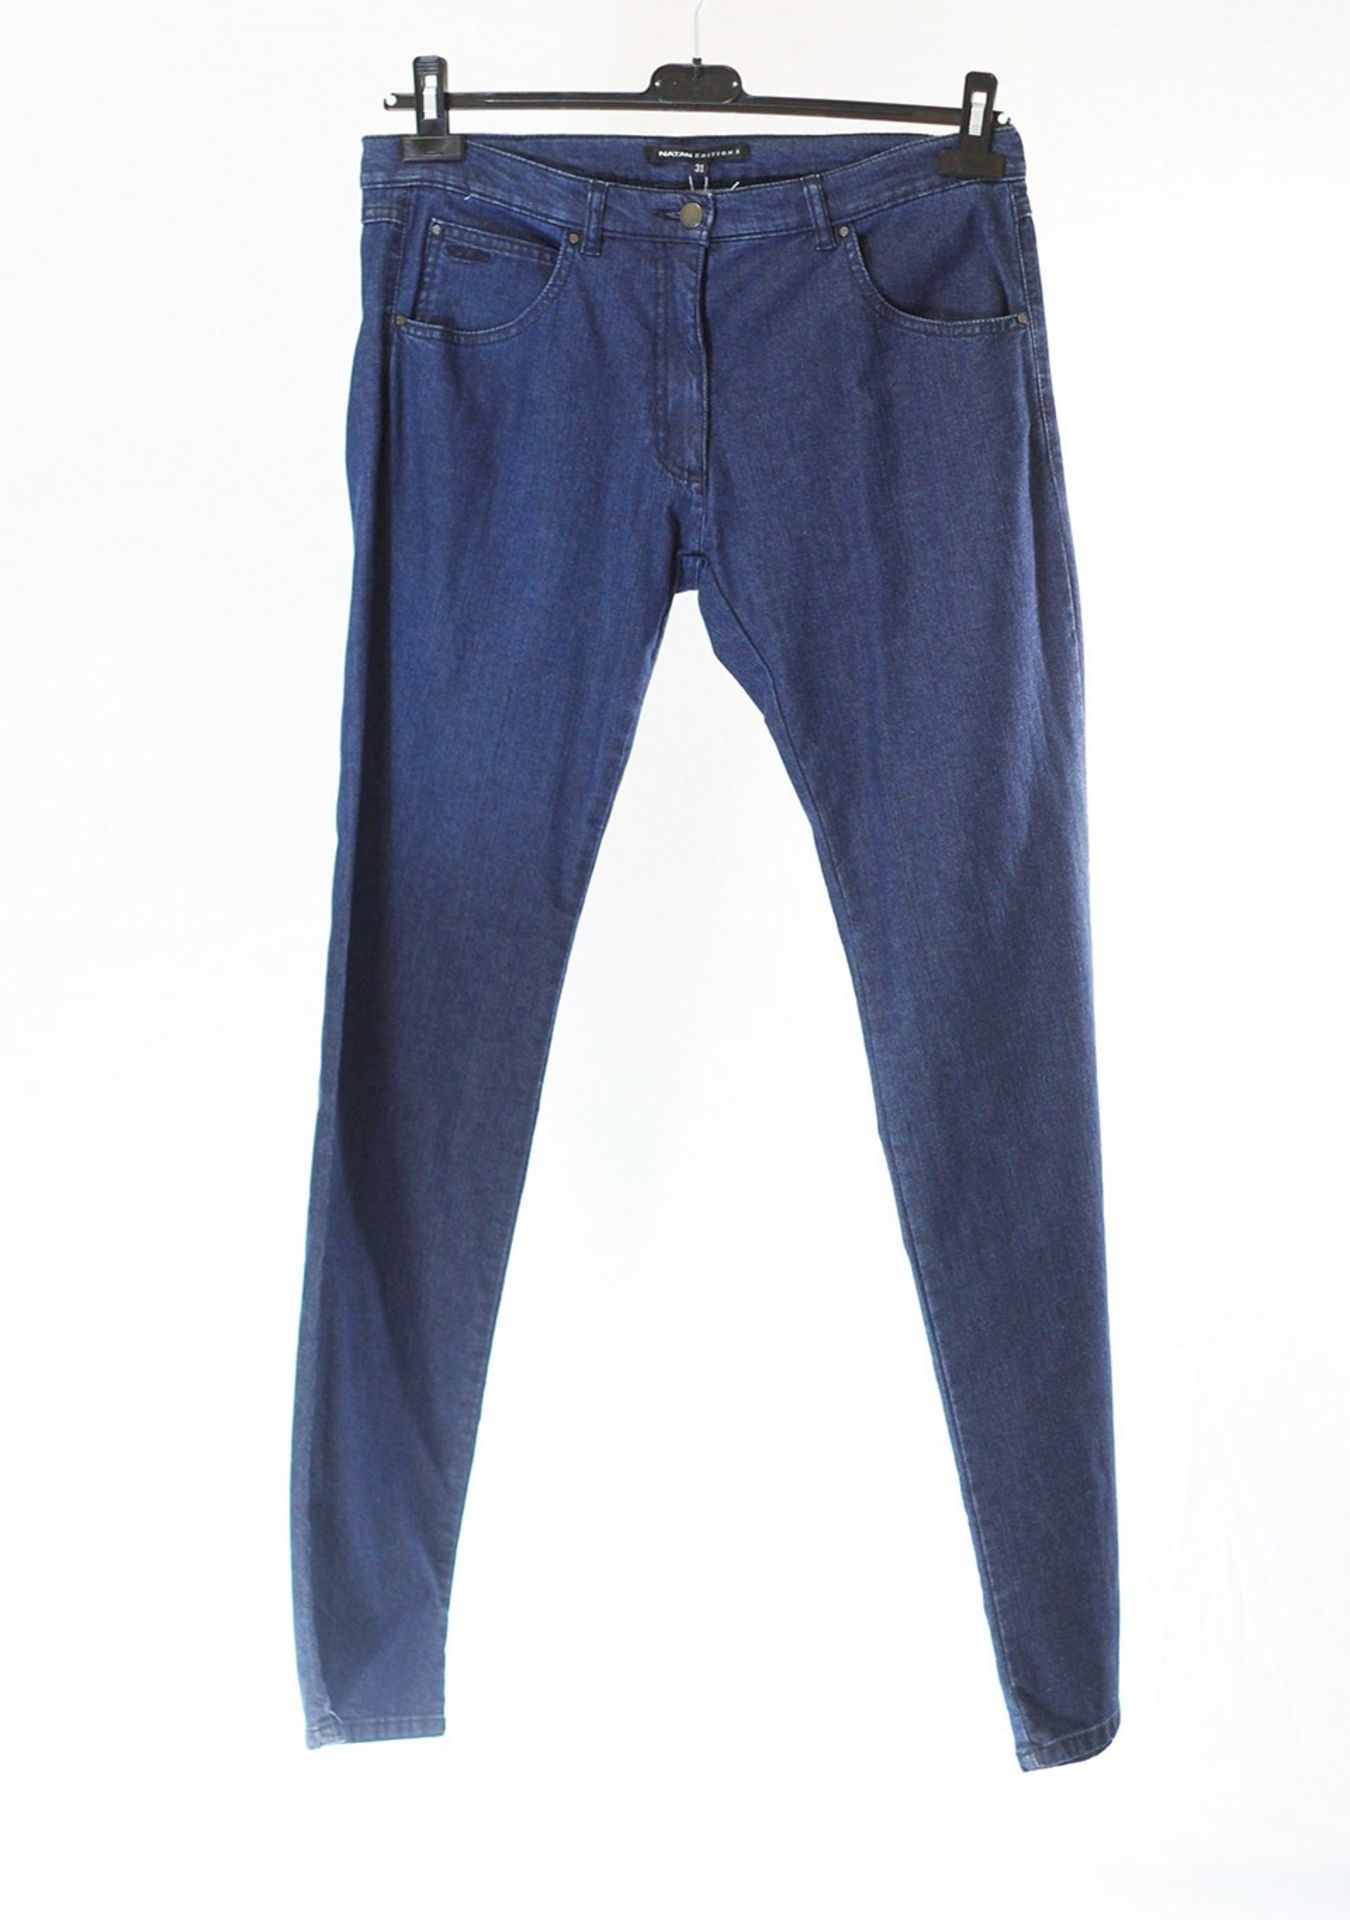 1 x Natan Denim Jeans - Size: 31 Waist - Material: 90% Cotton, 8% Polyester, 2% Elastane - From a